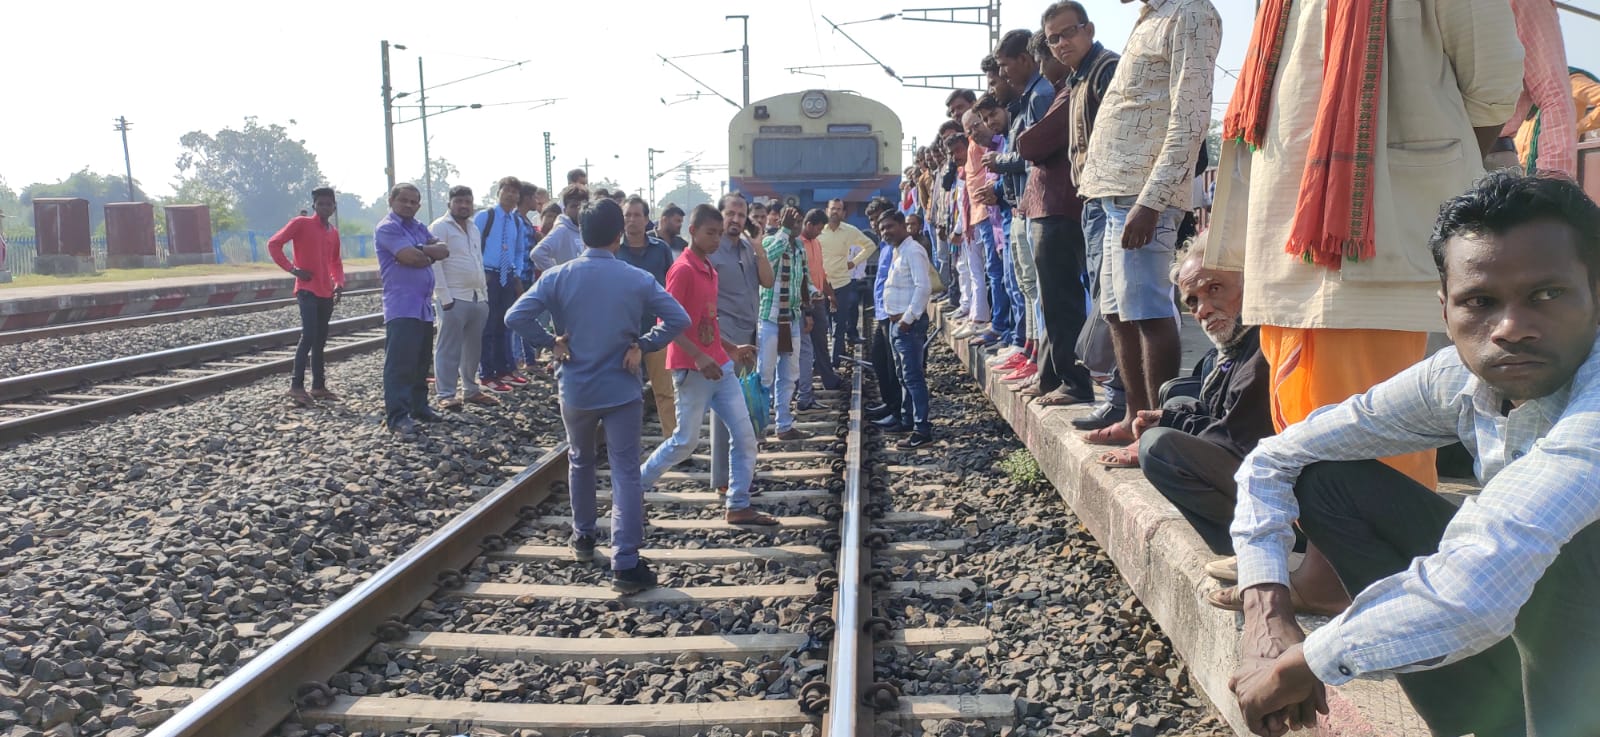 The train was going through broken tracks, passengers gave information